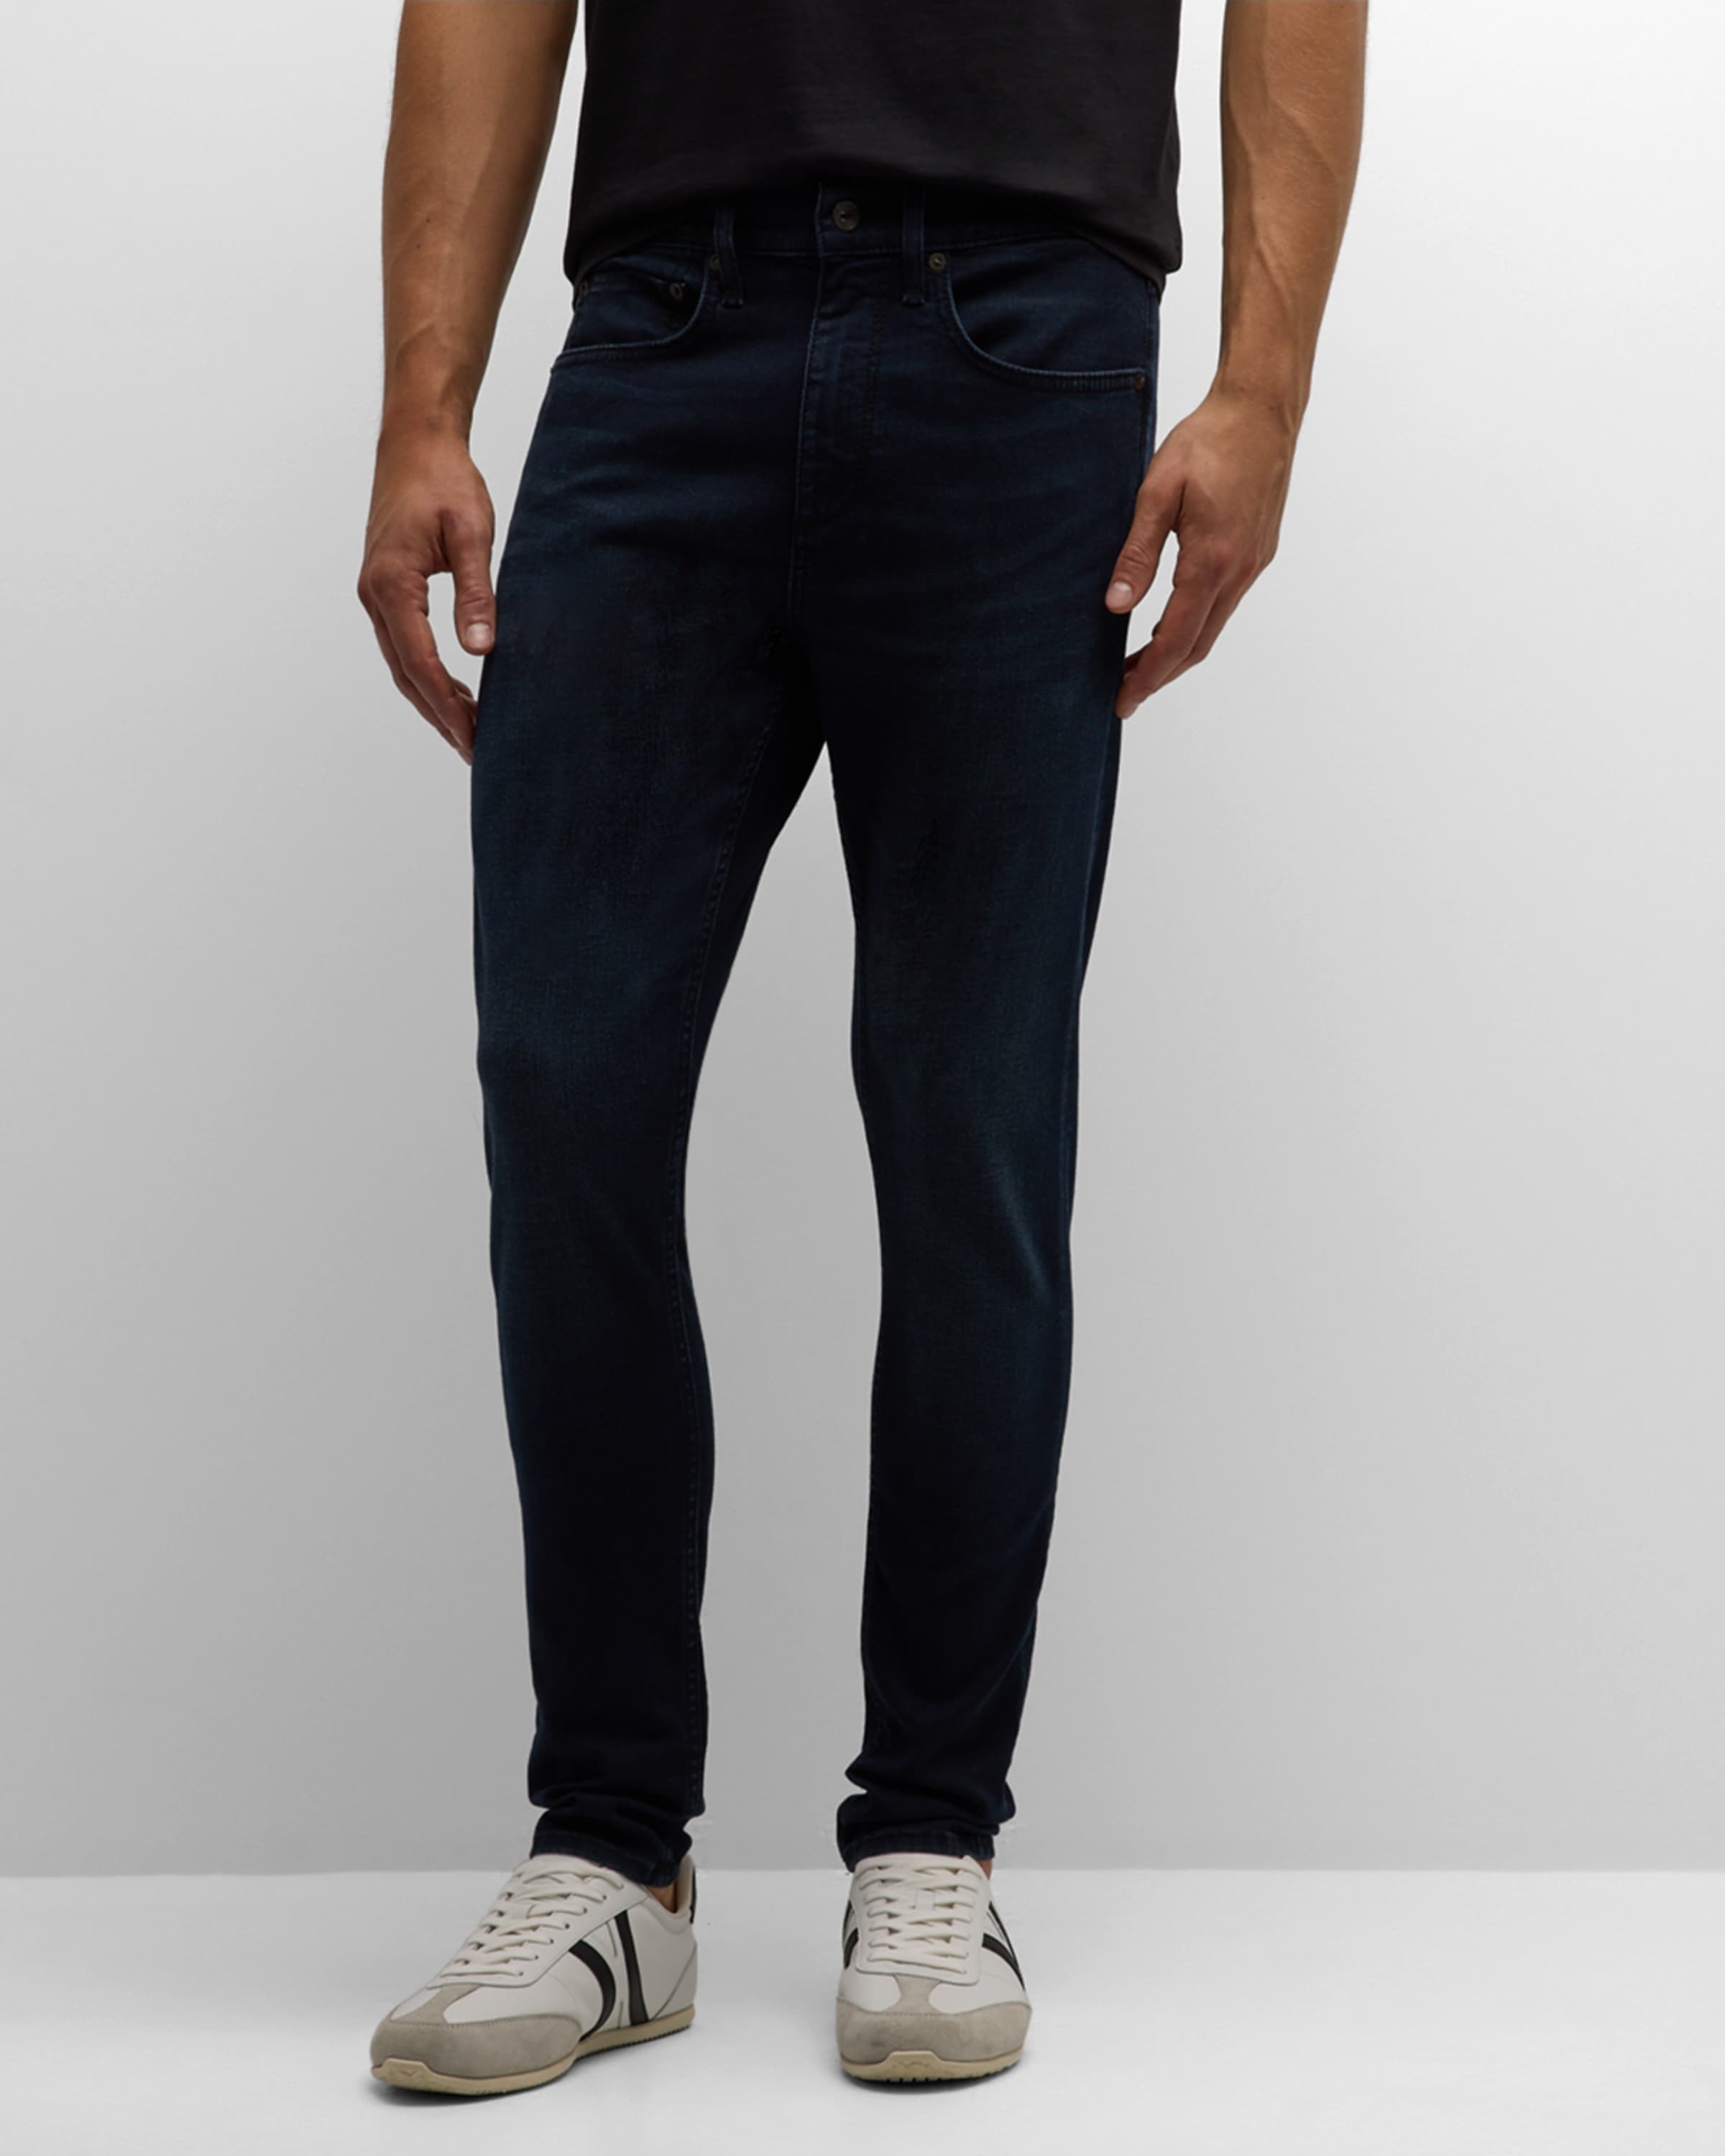 Men's Fit 1 Aero Stretch Denim Skinny Jeans - 2